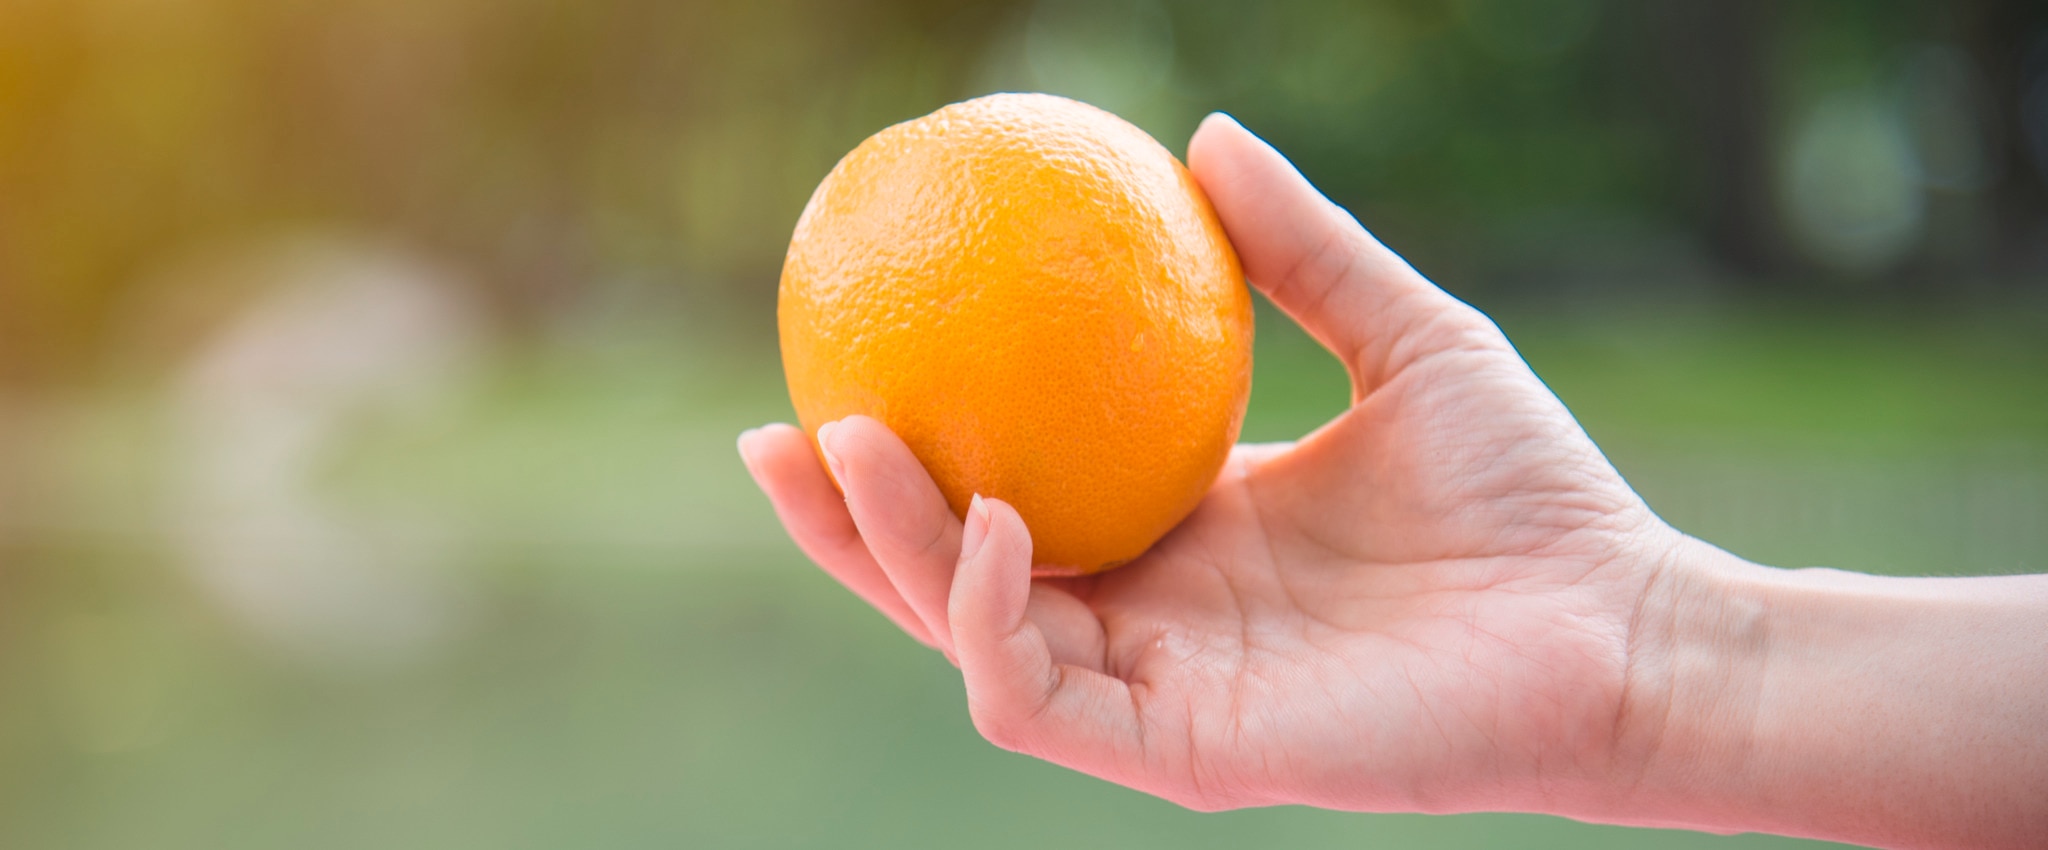 Hero-Immune boosting foods citrus foods